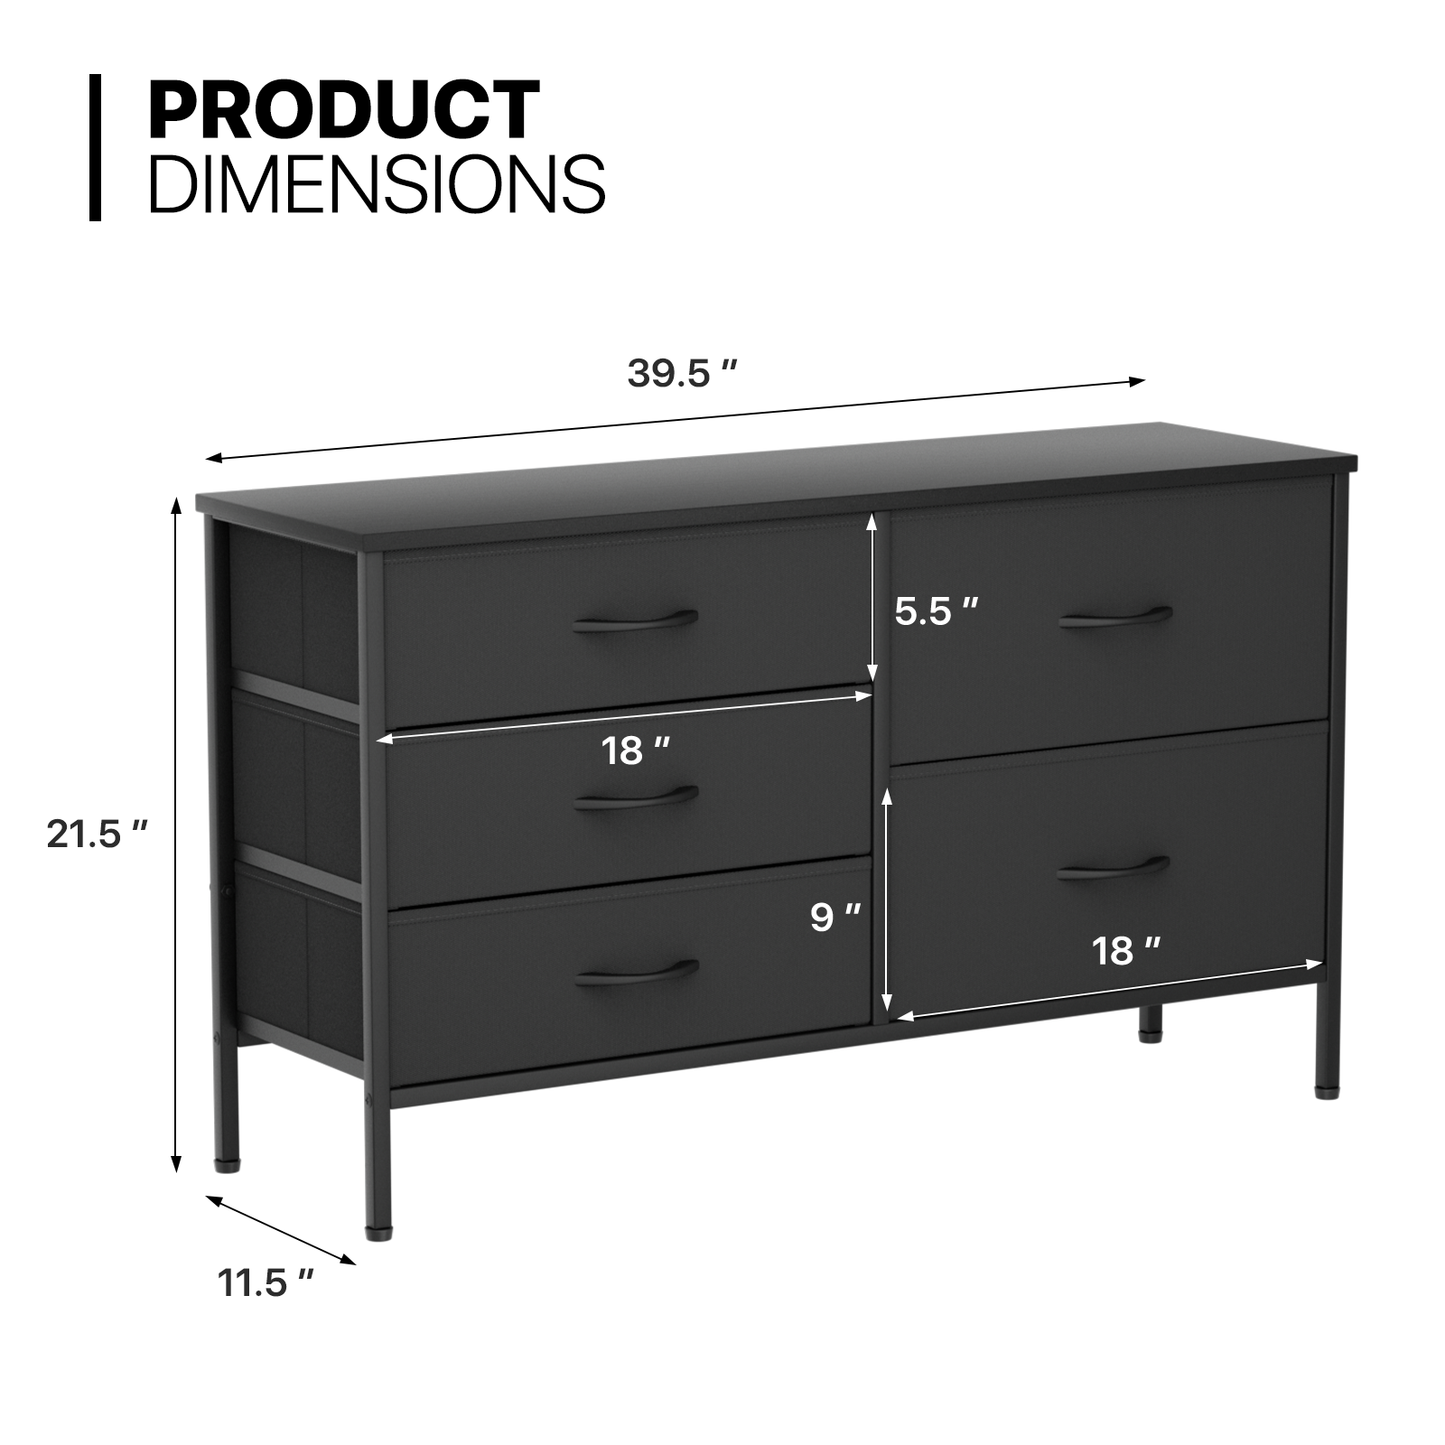 21.5" Height Dresser - 5 Fabric Drawer- Metal Frame - MDF Top